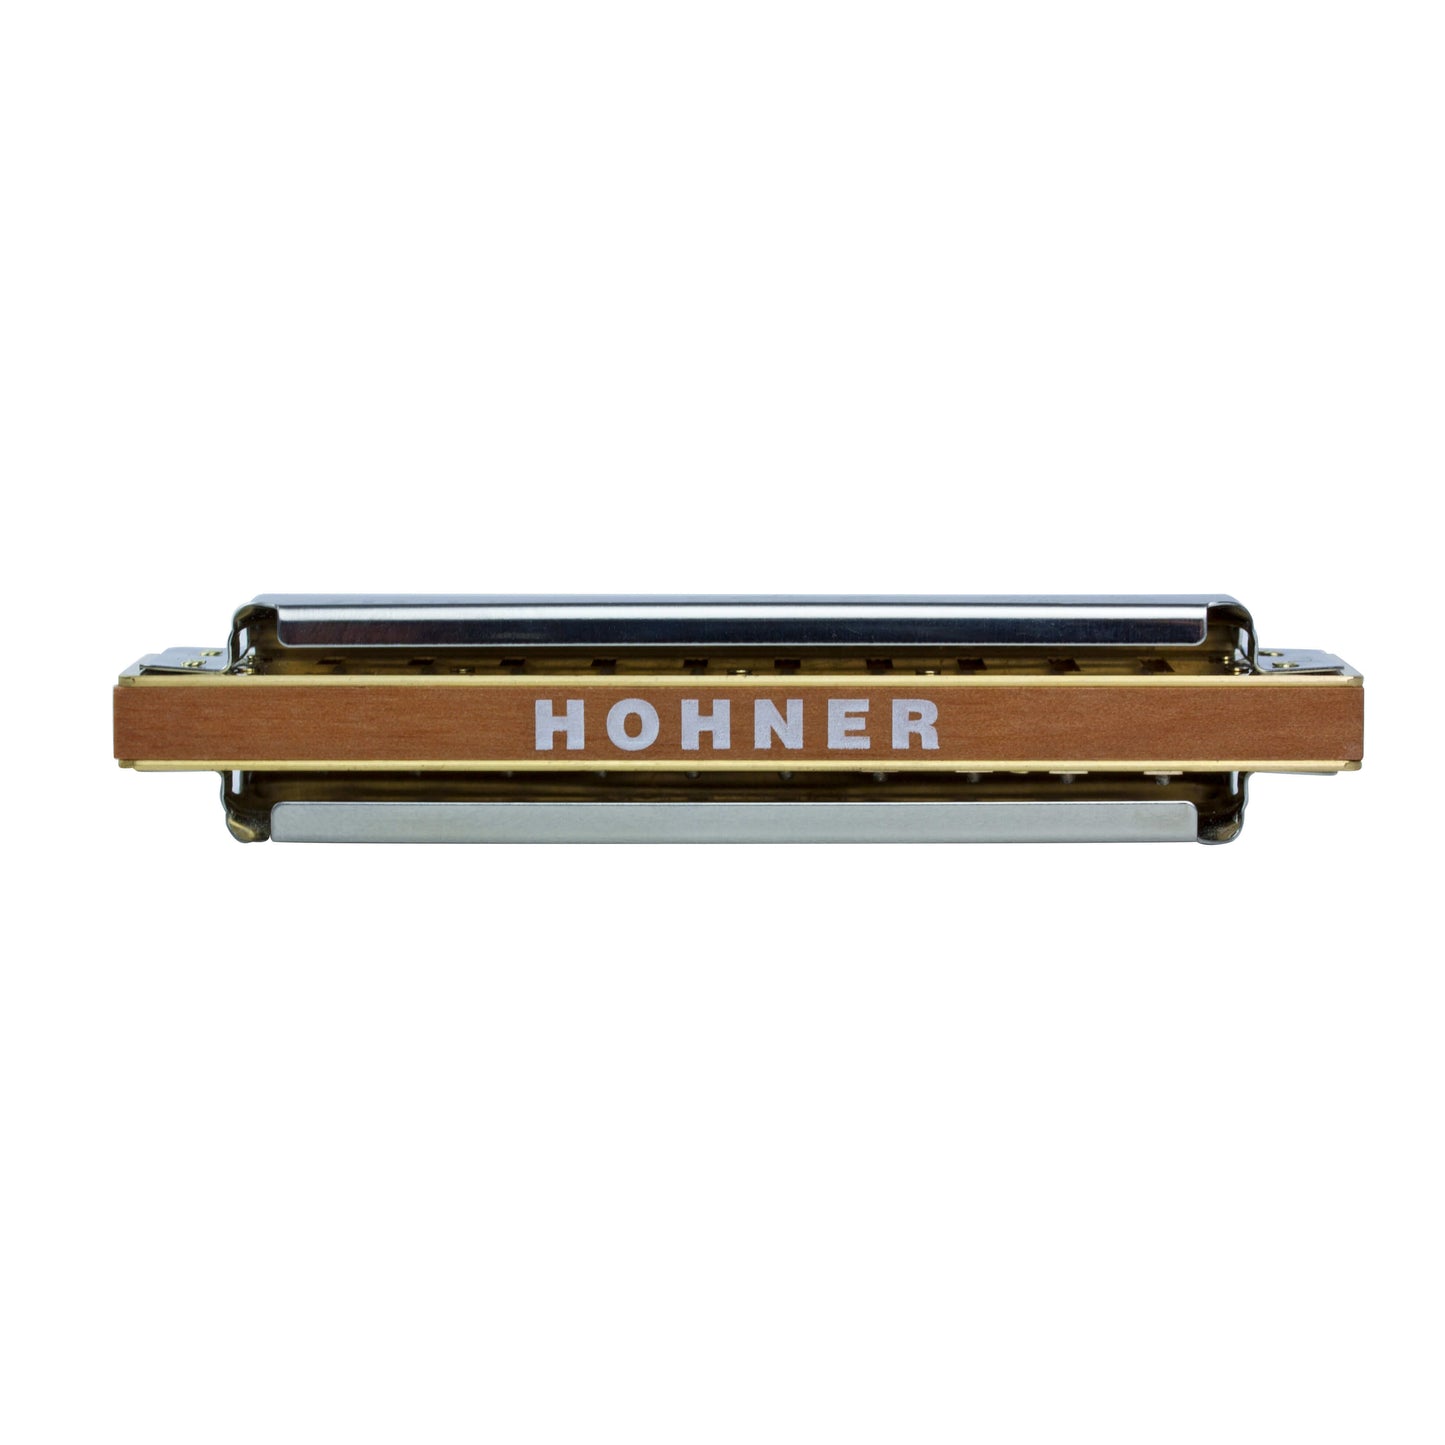 Hohner Marine Band 1896 Classic Harmonica, Key of C